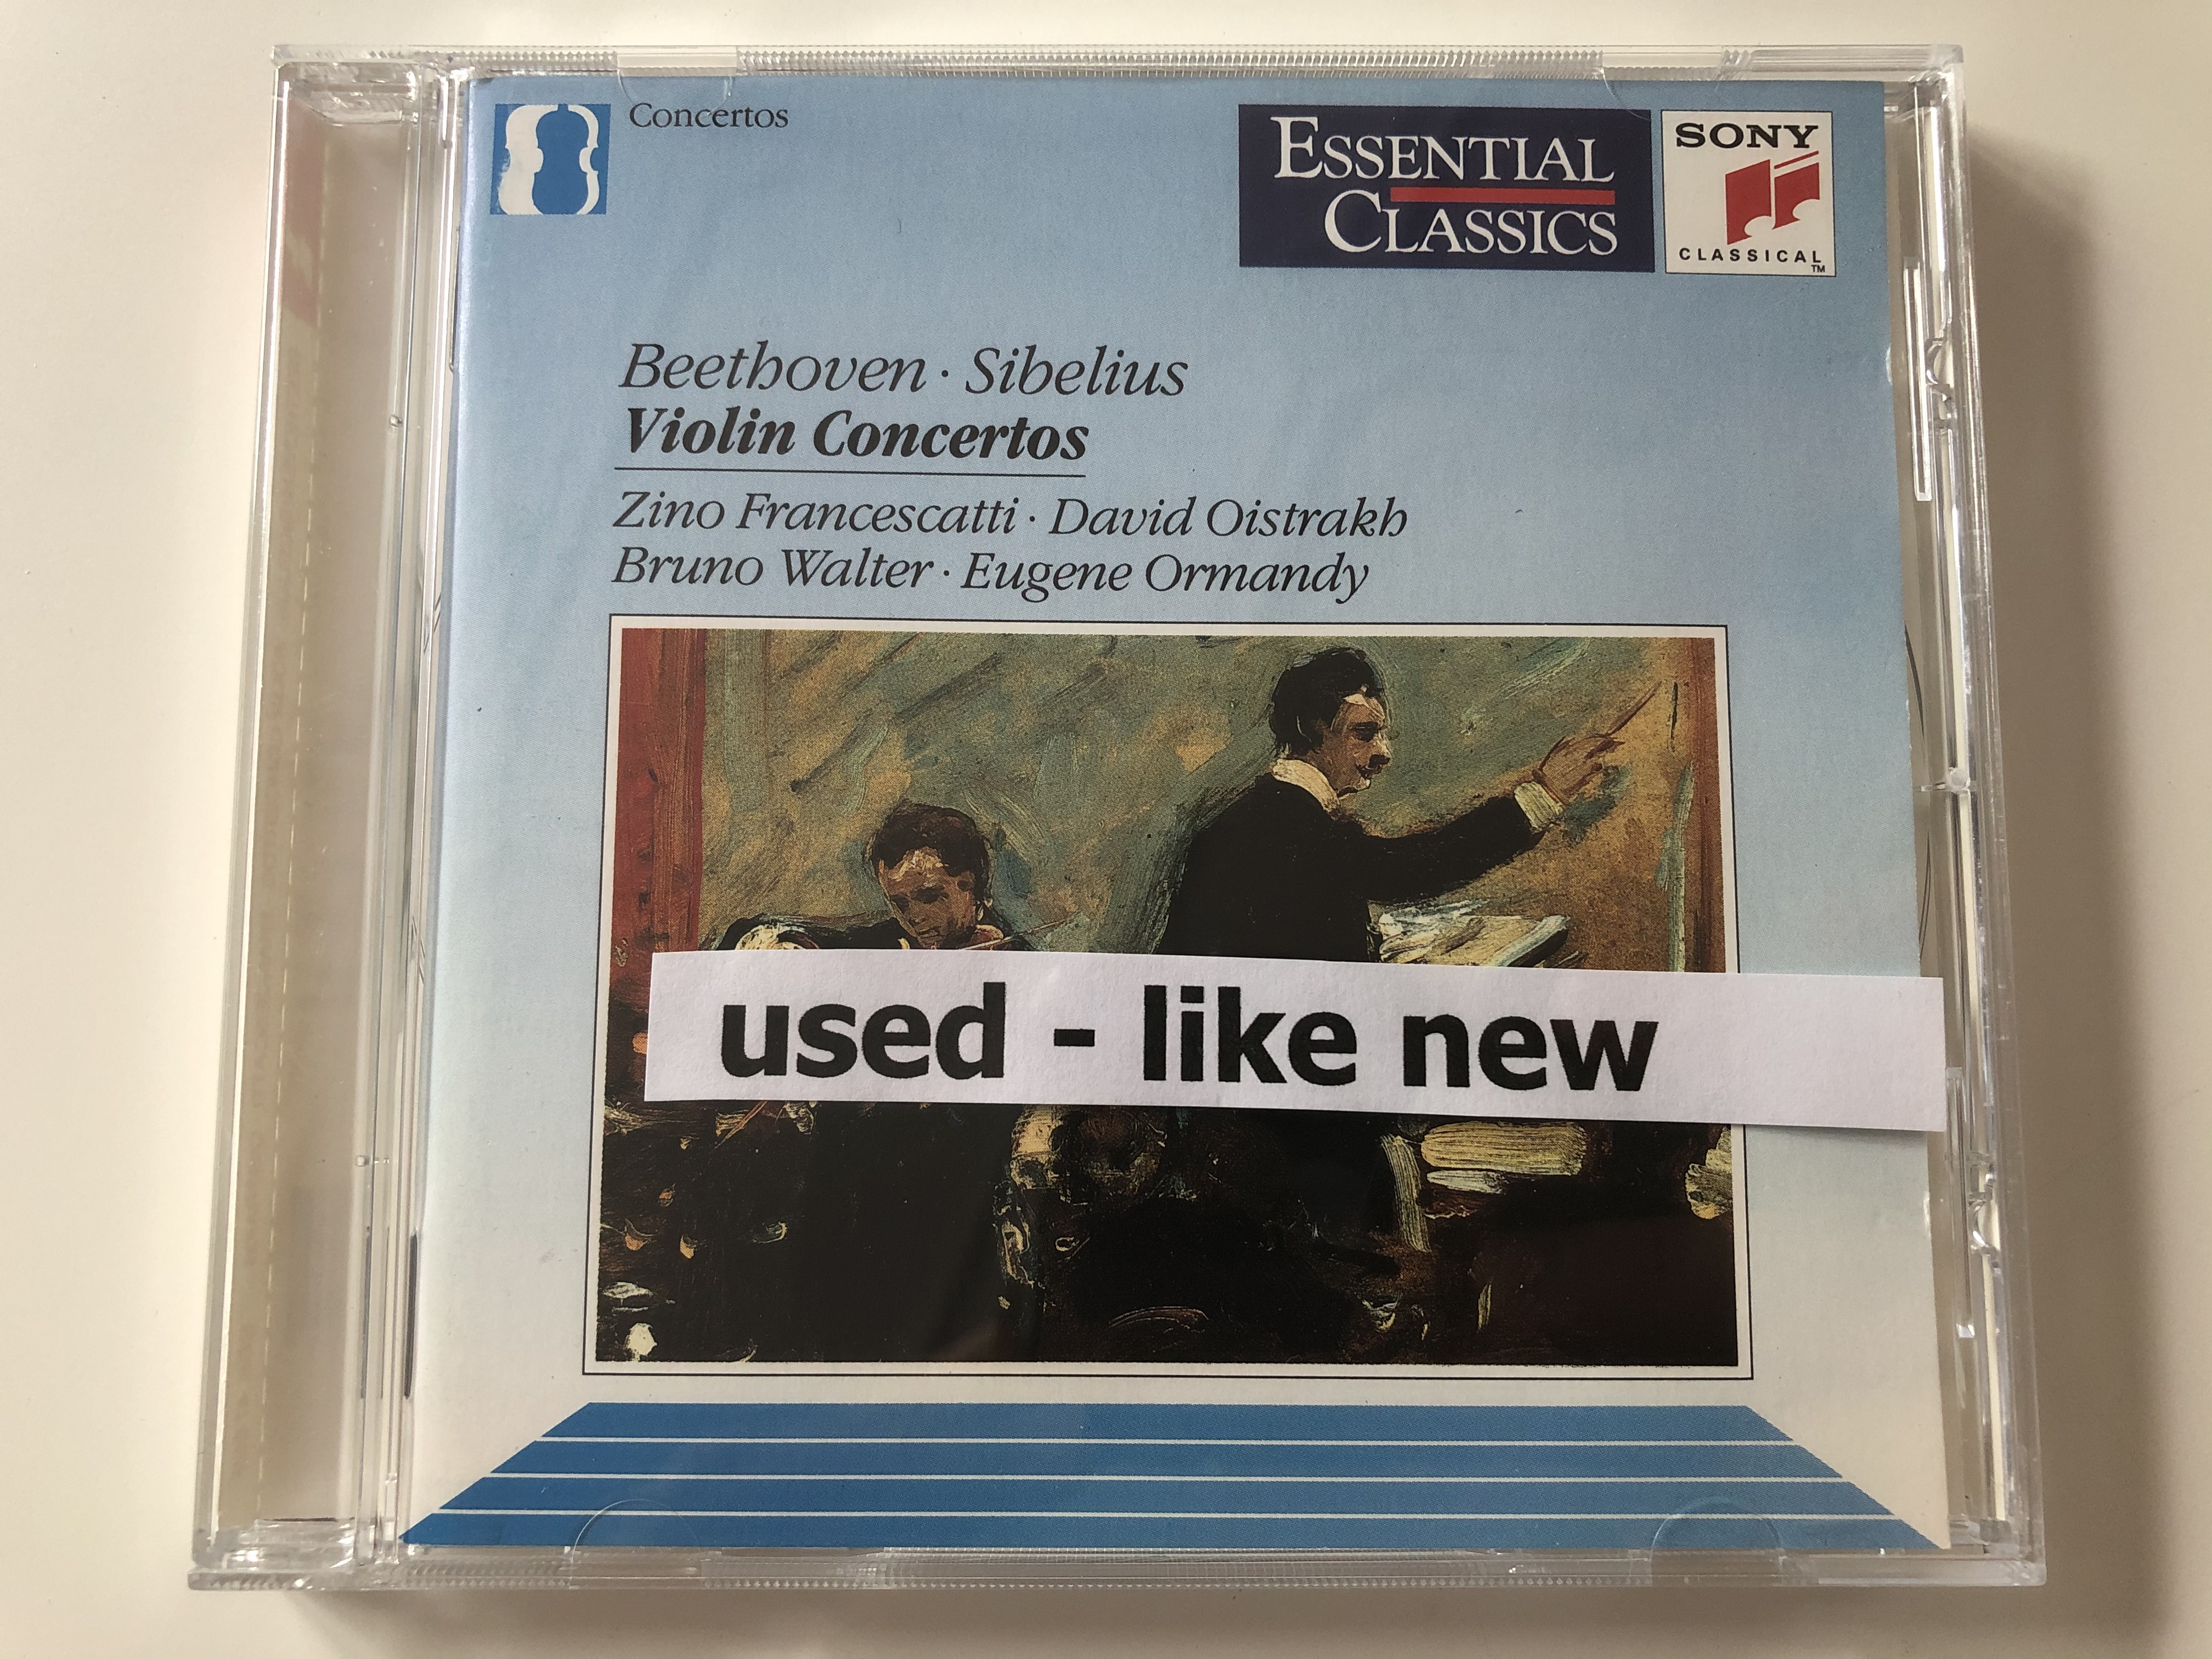 beethoven-sibelius-violin-concertos-zino-francescatti-david-oistrach-bruno-walter-eugene-ormandy-sony-classical-audio-cd-1991-sbk-47659-8-.jpg